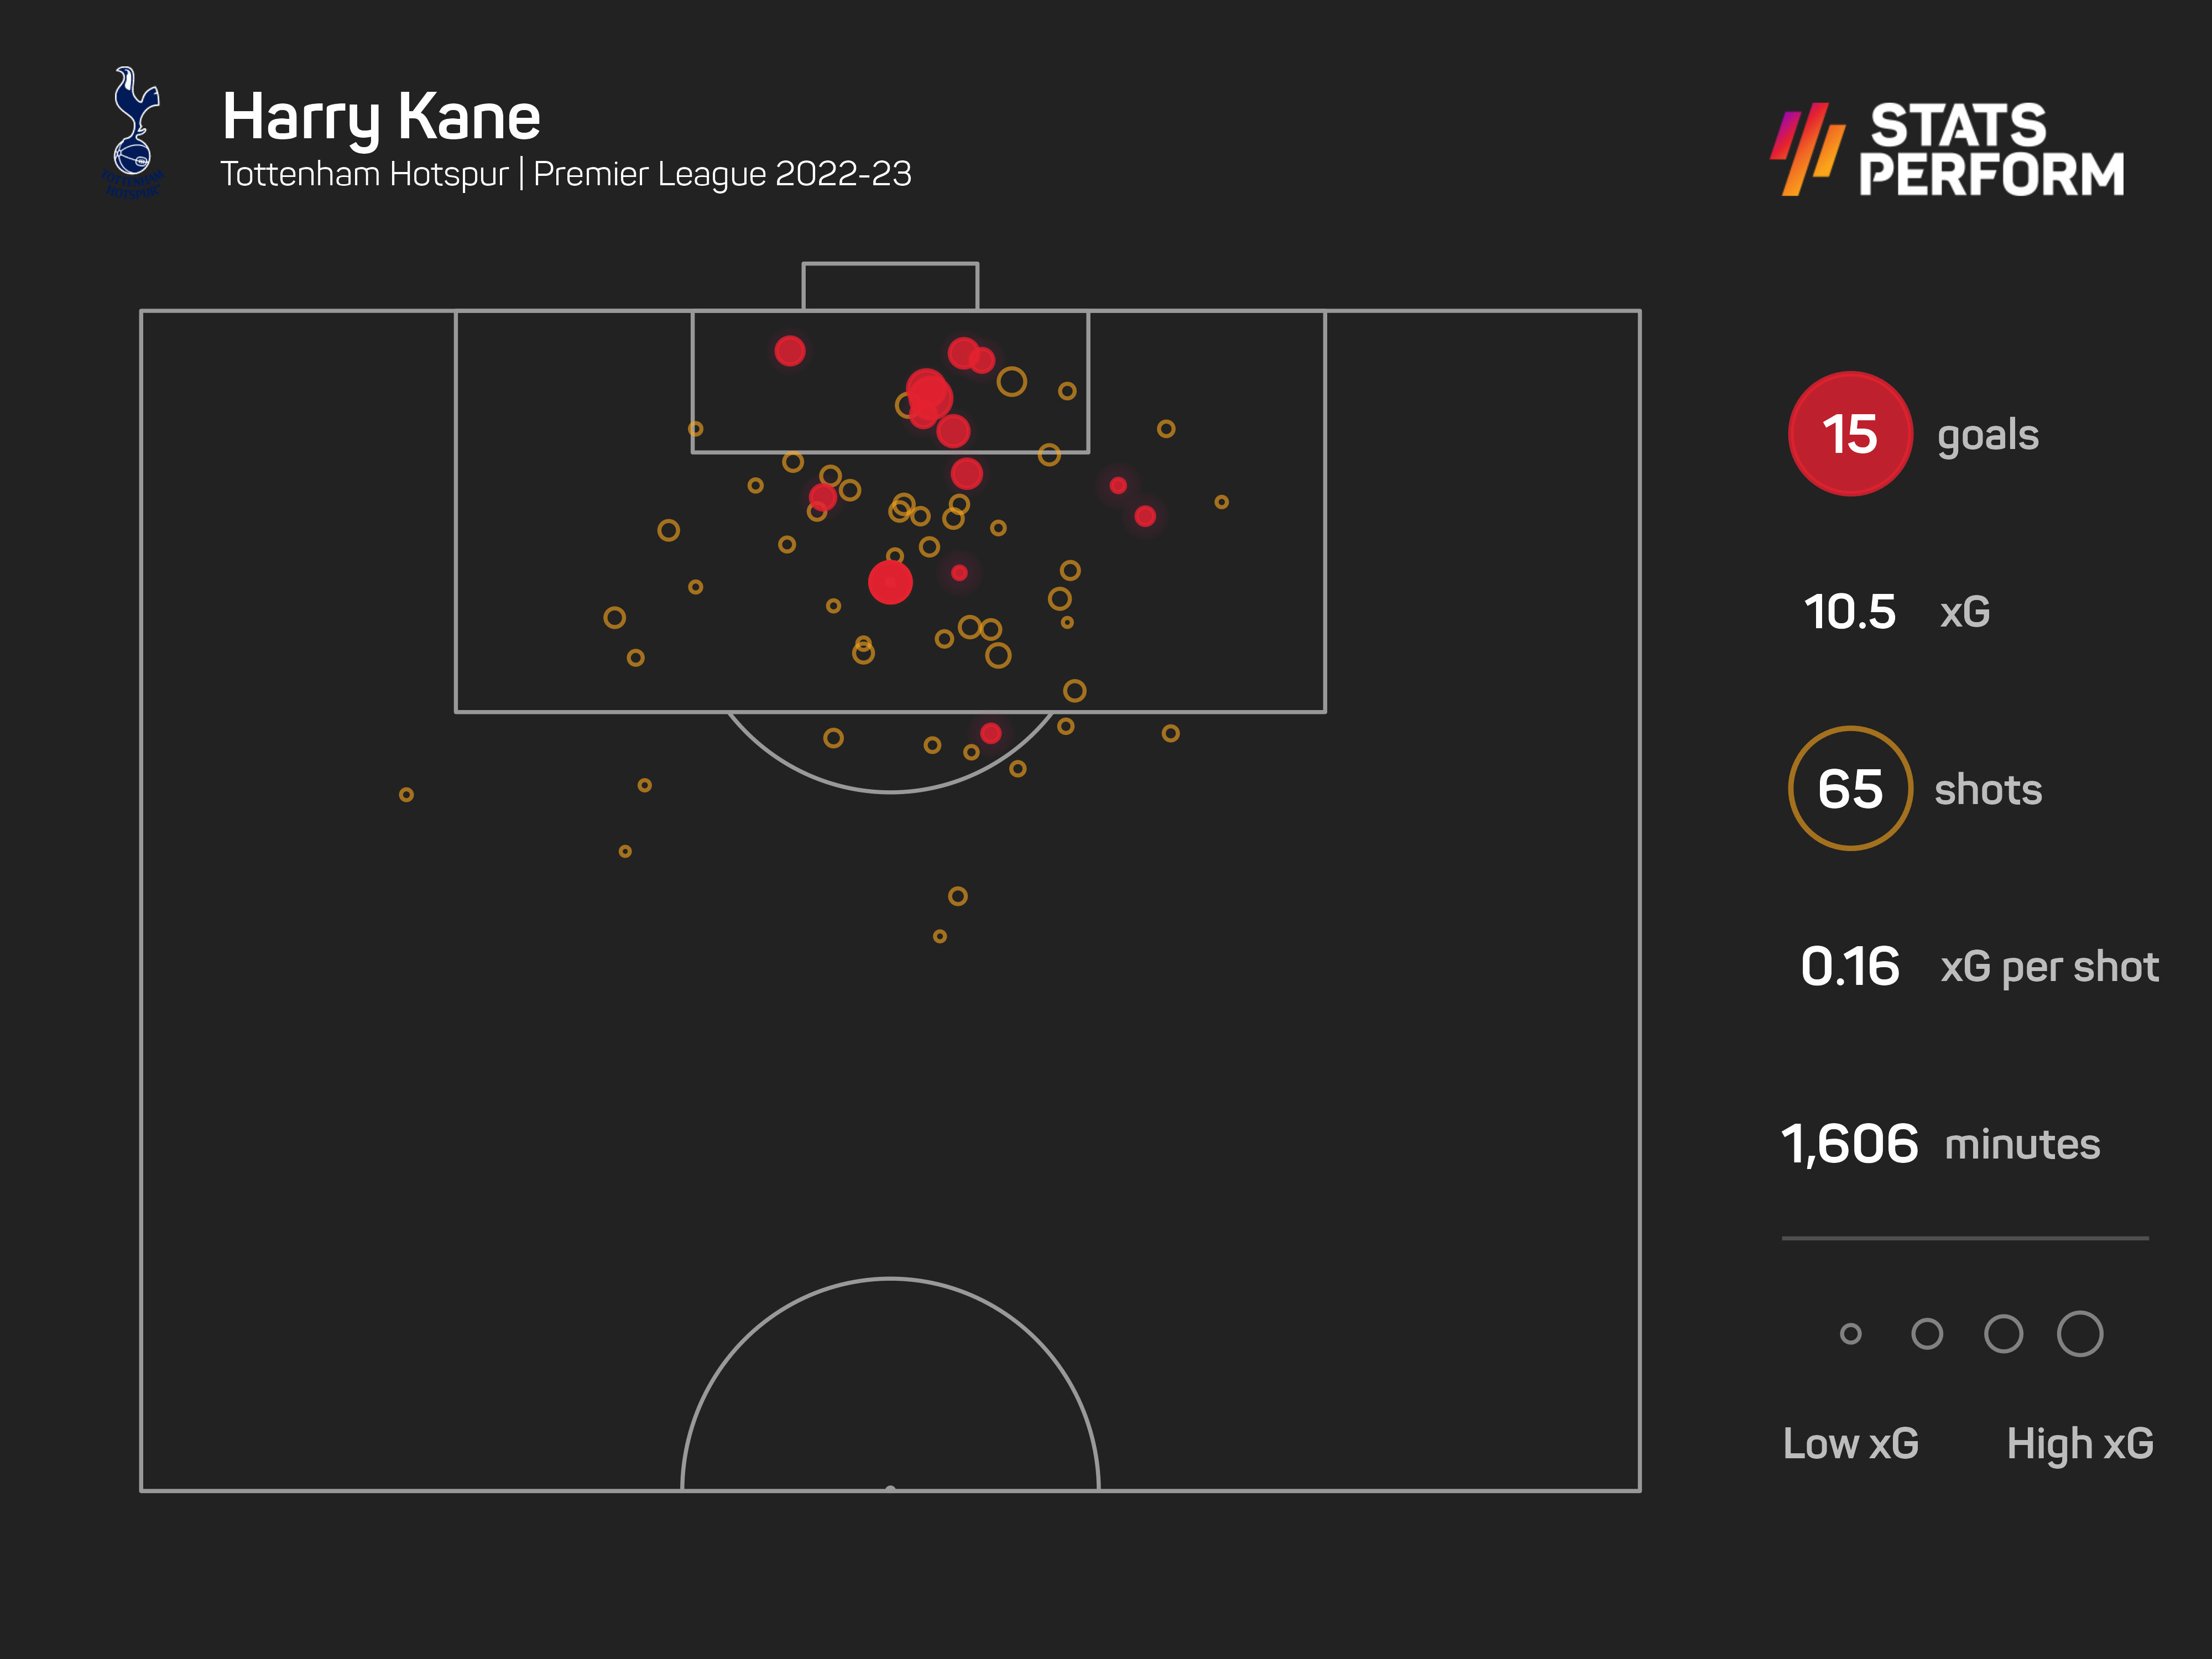 Harry Kane has hit 15 Premier League goals this season